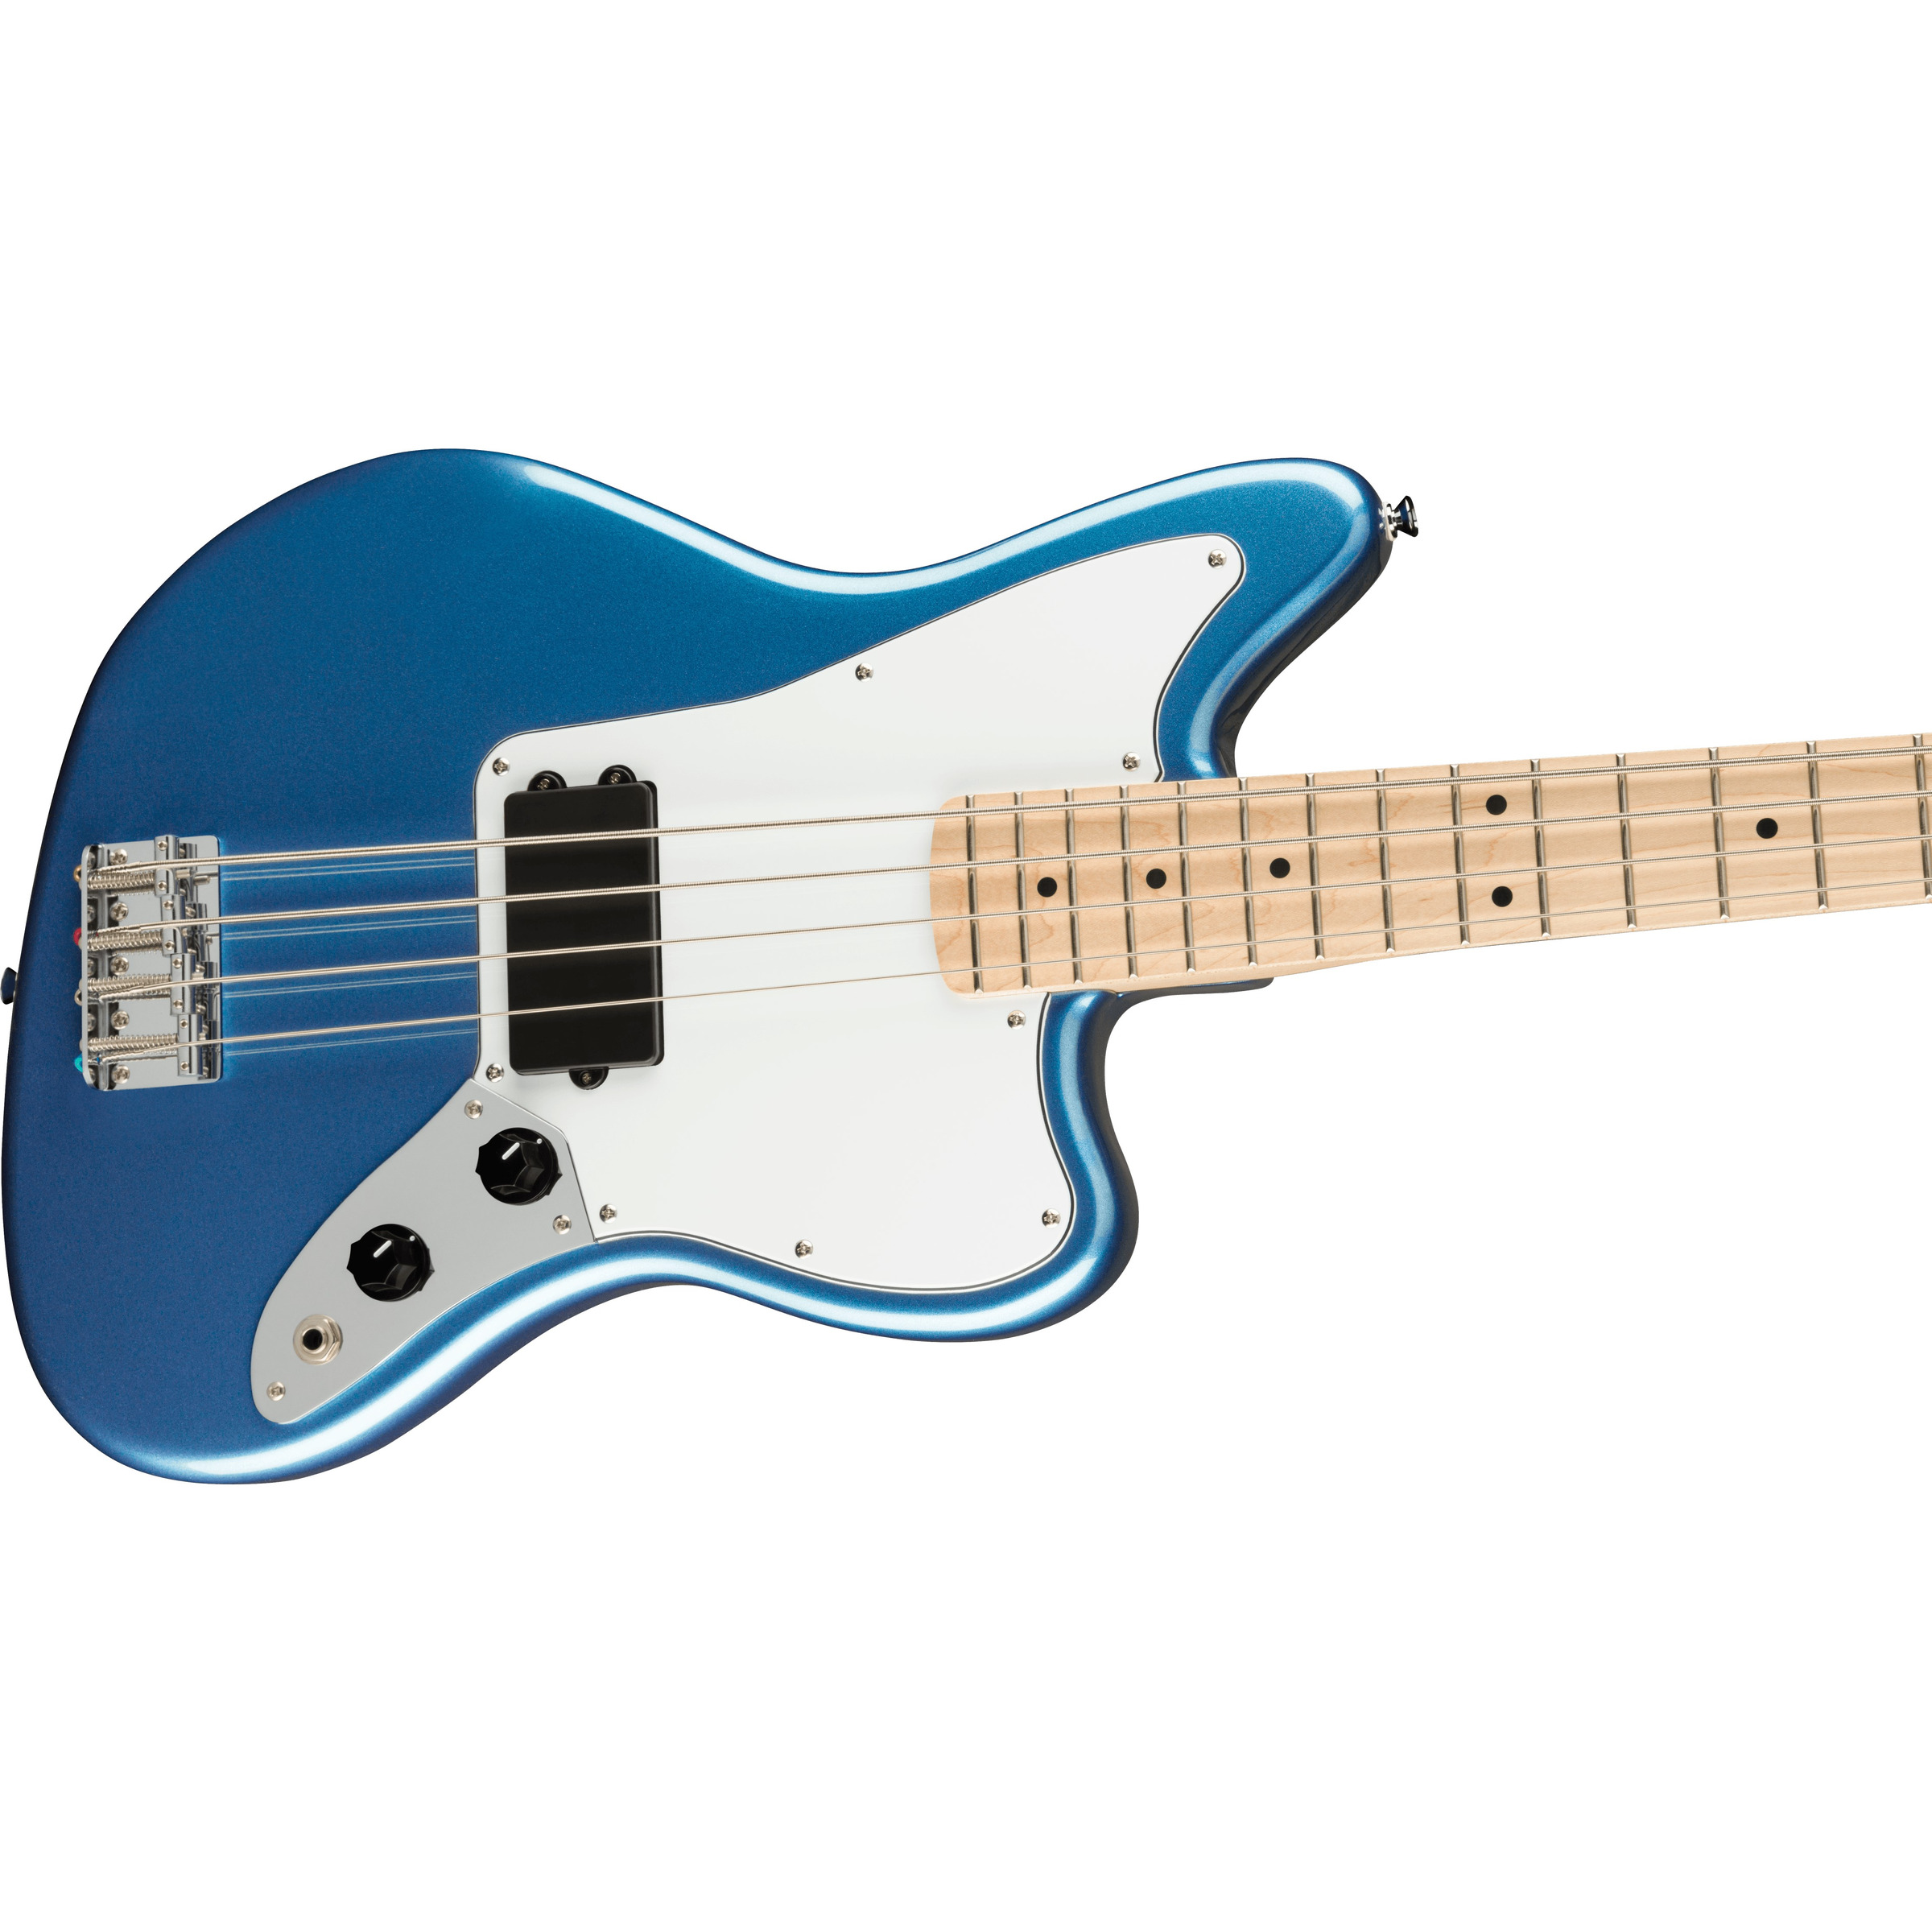 H bass. Squier Jaguar Bass. Fender Squier Affinity 2021 Jazzmaster ДКД Lake Placid Blue. Squier Affinity. Fender Jaguar Blue.